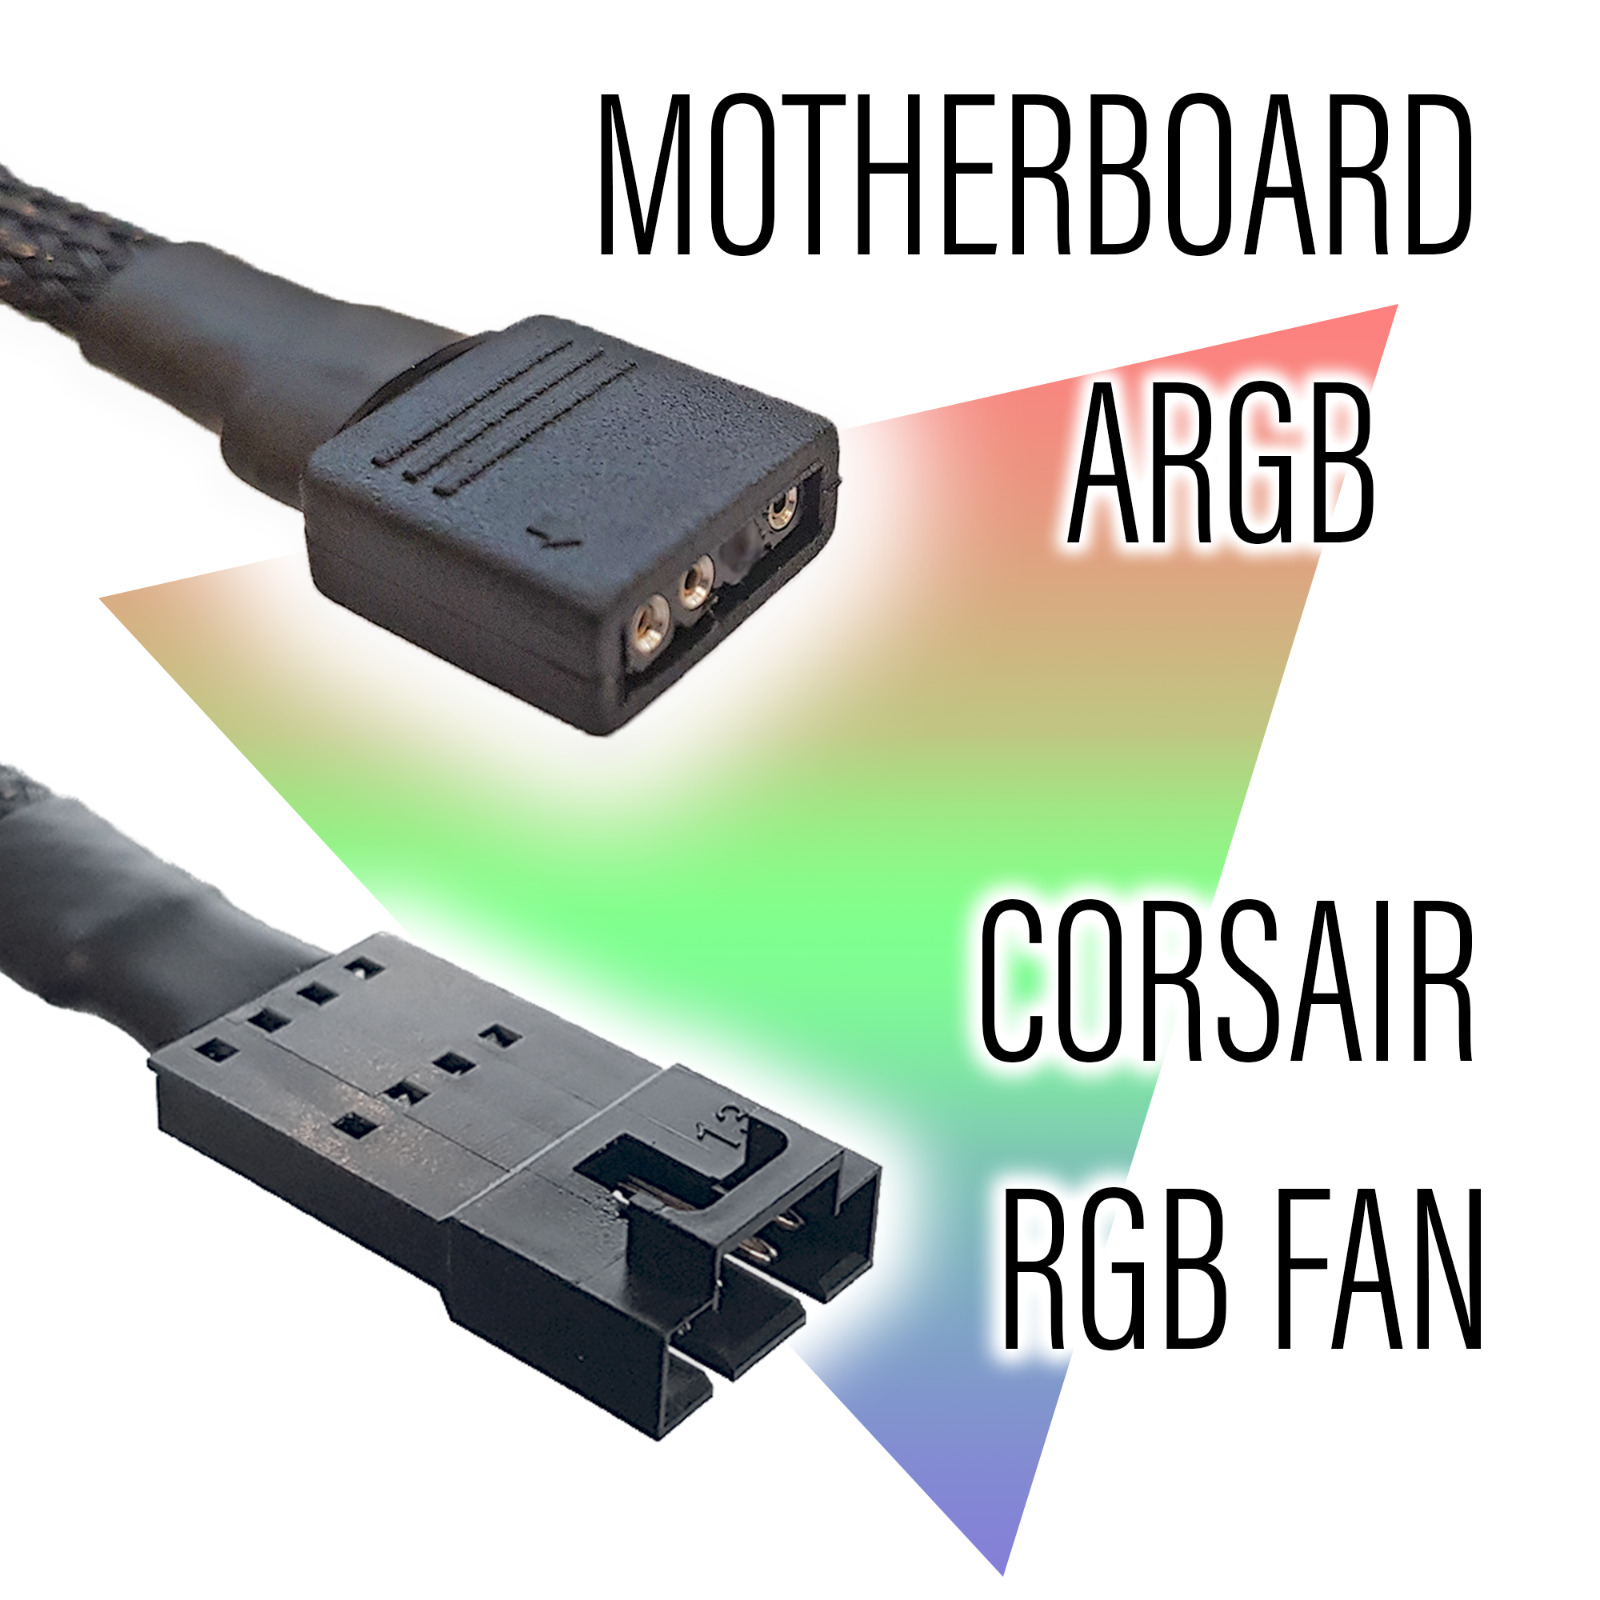 Motherboard Standard ARGB 3-pin 5V to Corsair RGB Fan Adapter